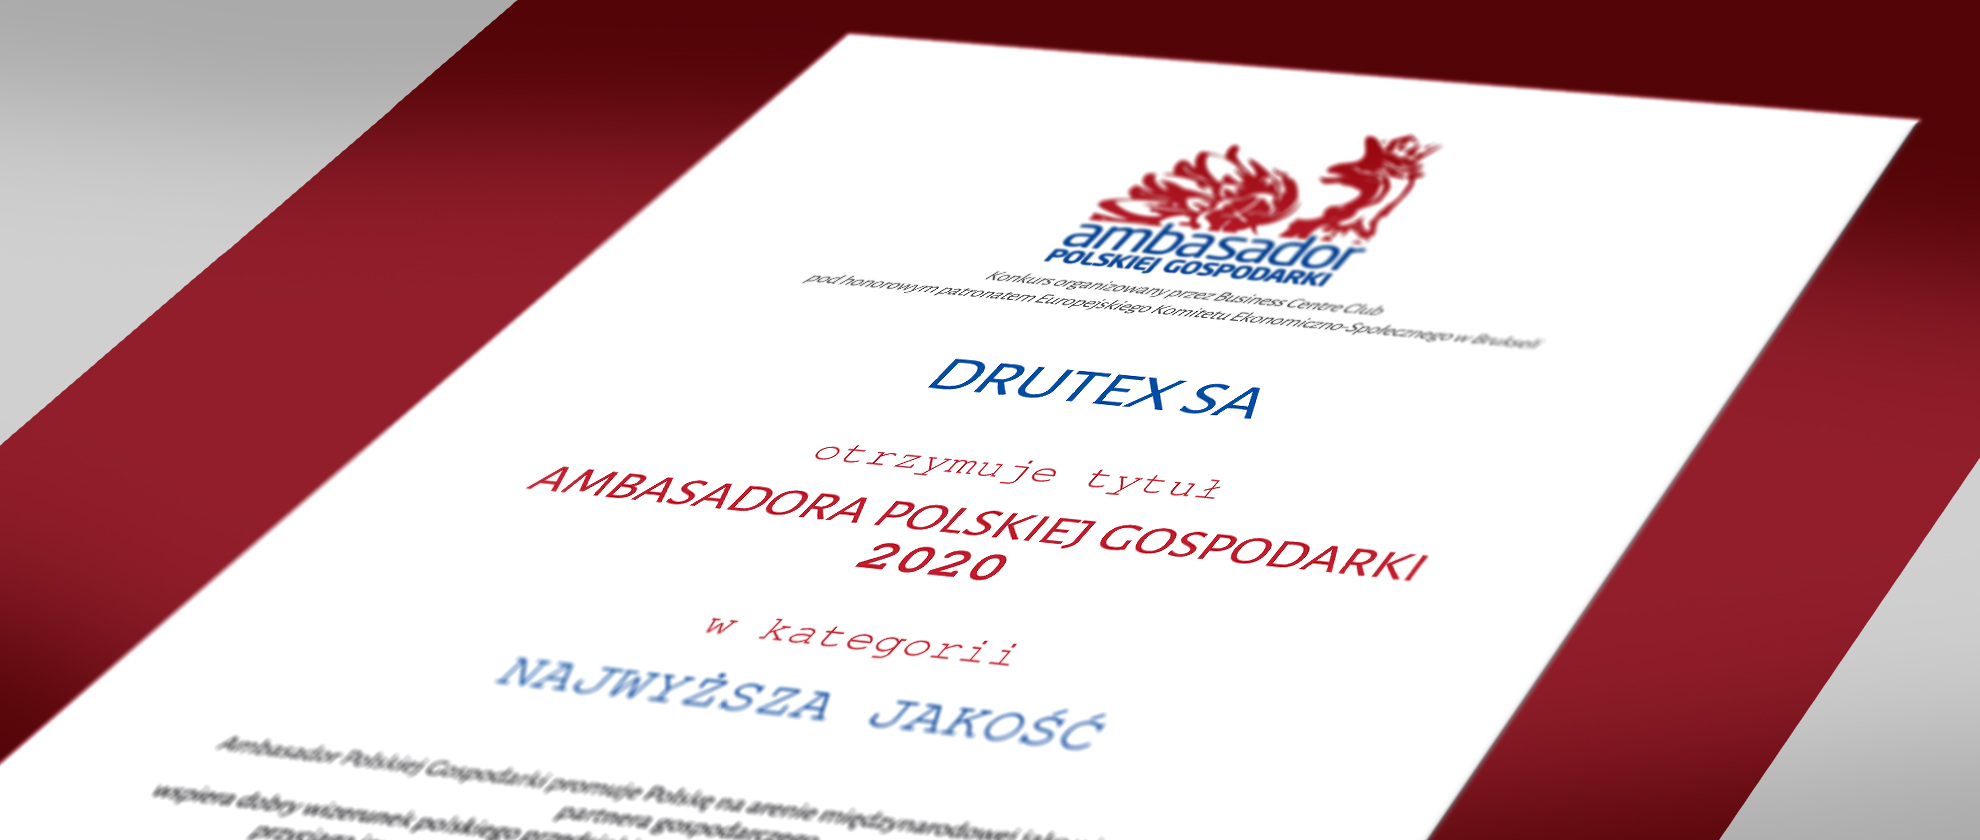 Drutex - the Ambassador of Polish Economy